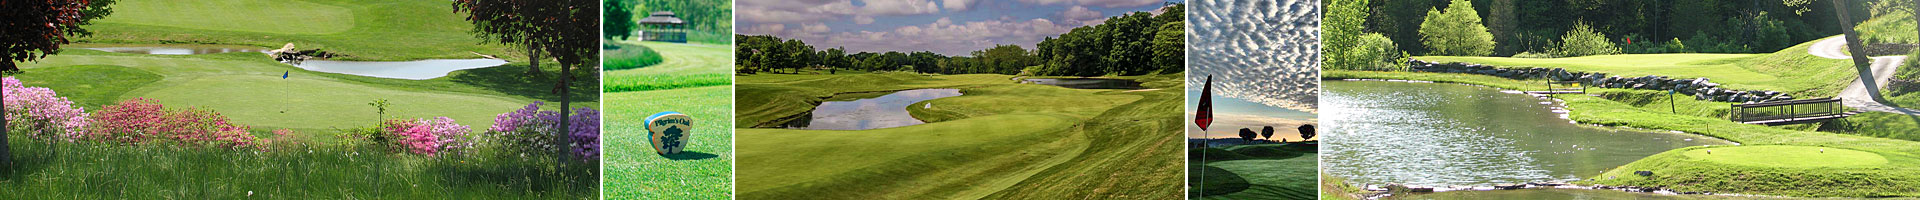 Pilgrim's Oak Golf Course | Public Championship Club | Peach Bottom, PA ...